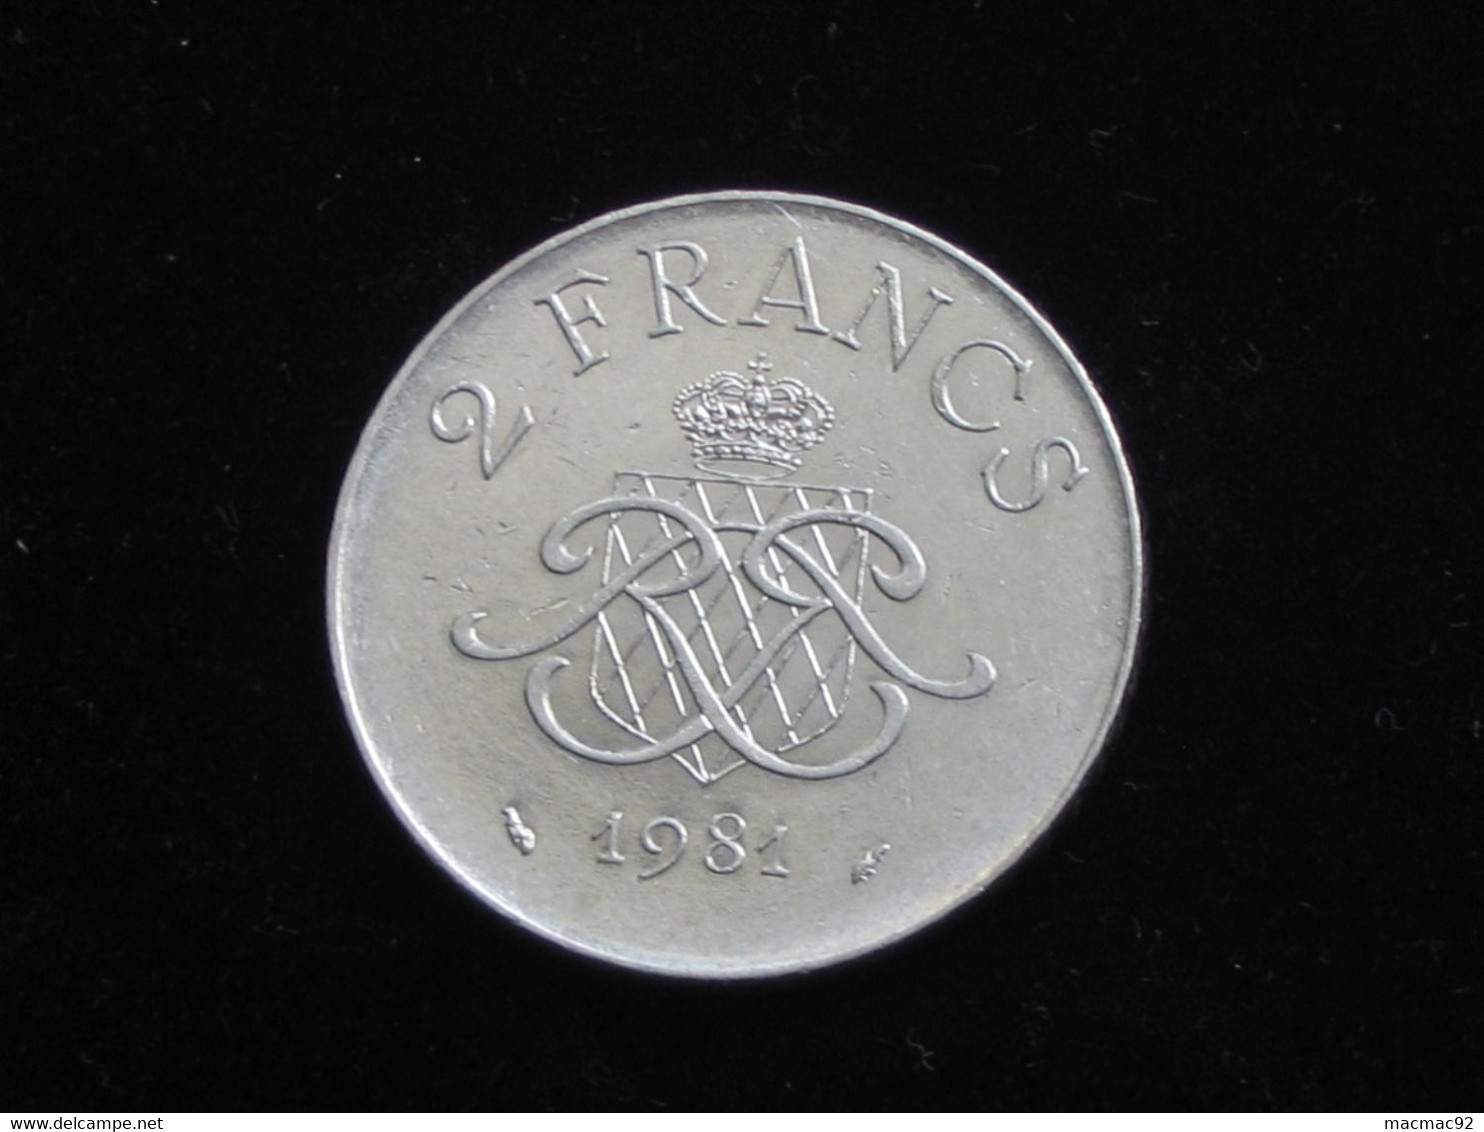 MONACO - 2 Francs 1981 - Rainier III Prince De Monaco **** EN ACHAT IMMEDIAT **** - 1949-1956 Alte Francs